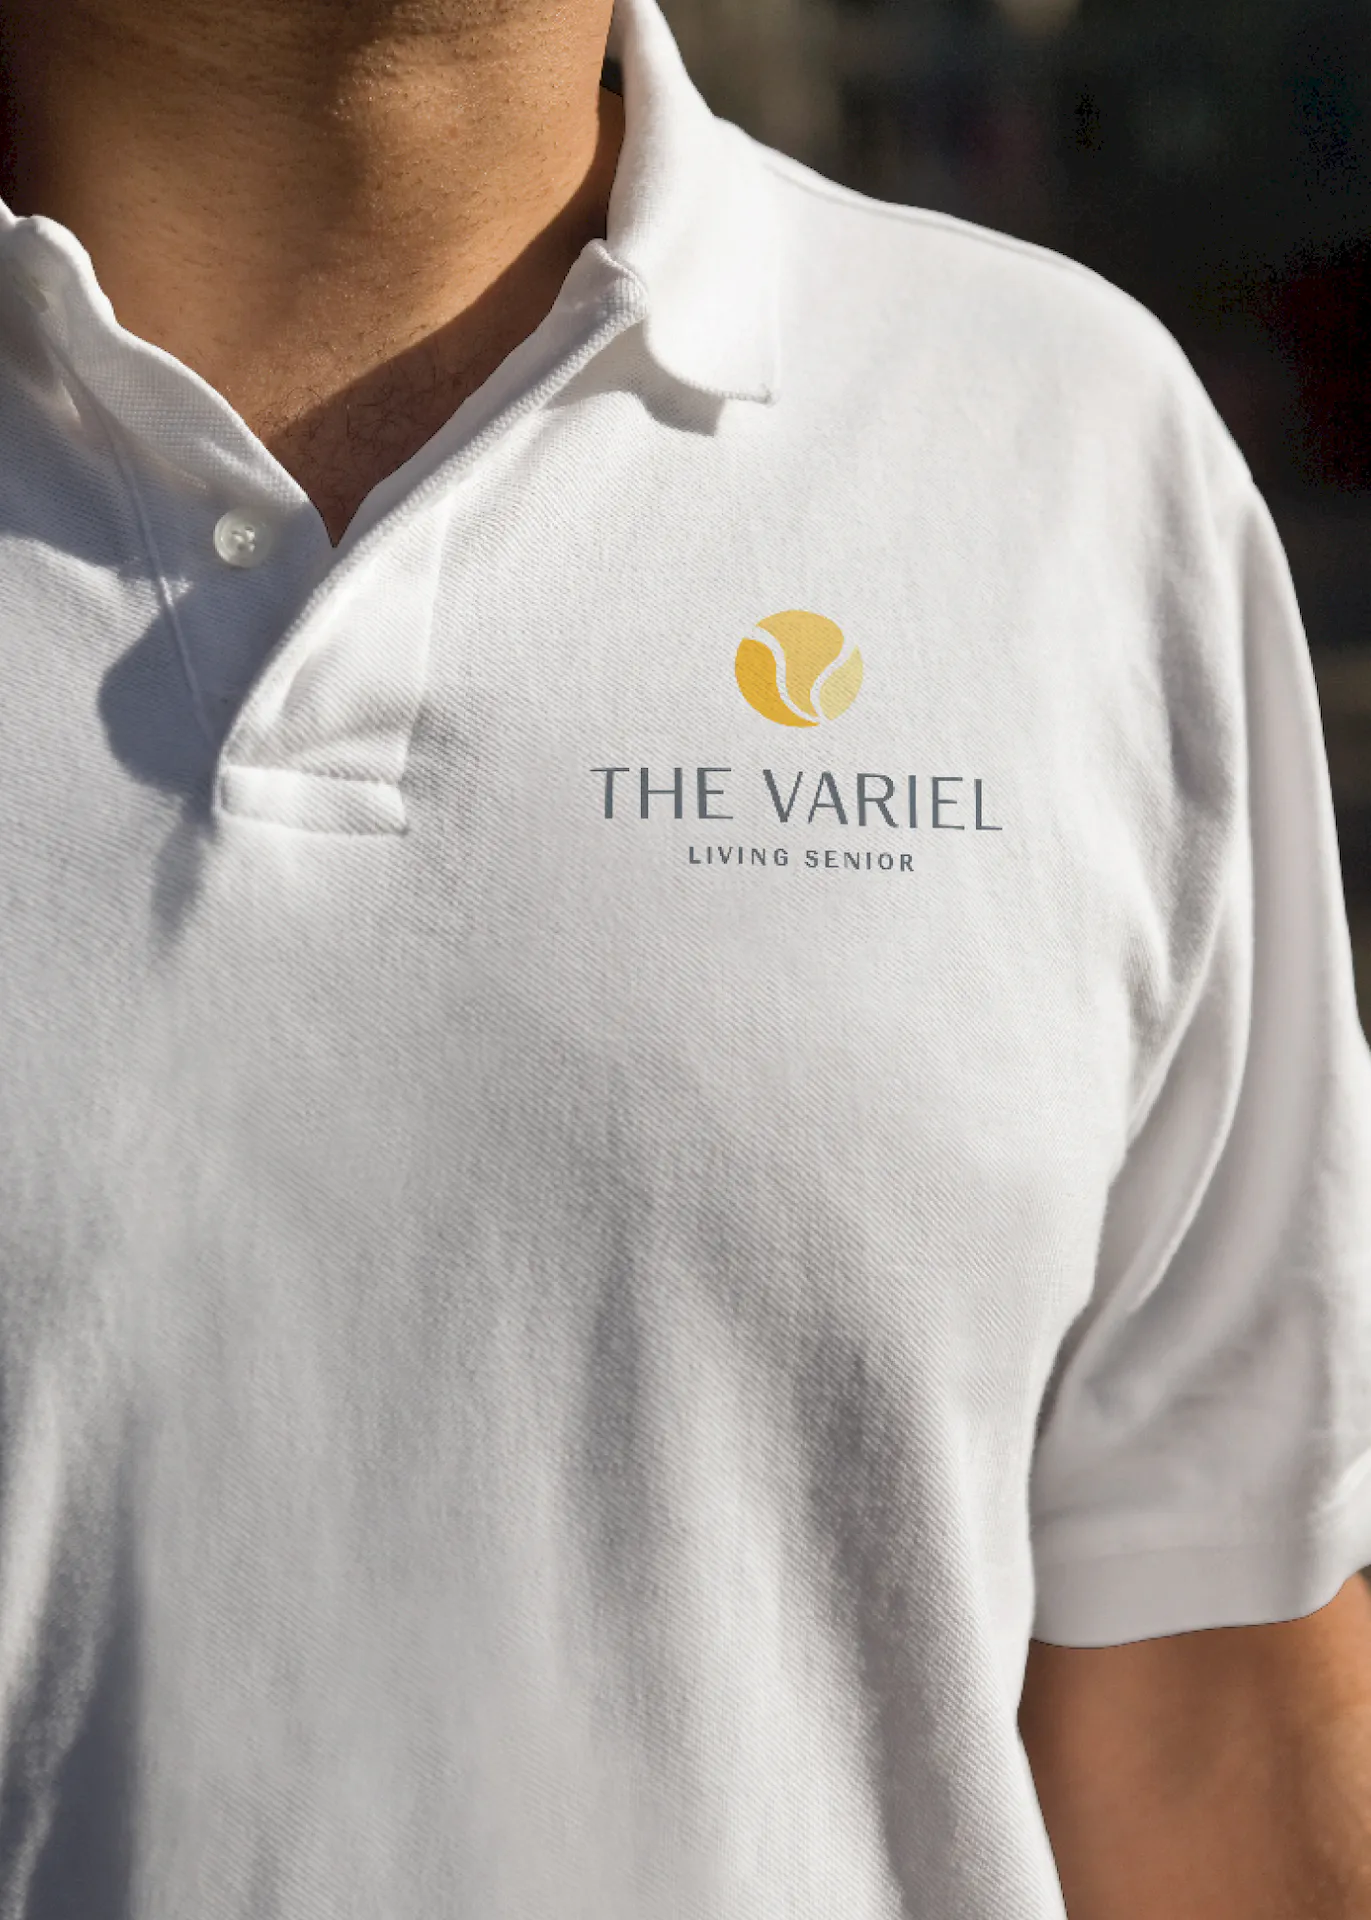 The Variel